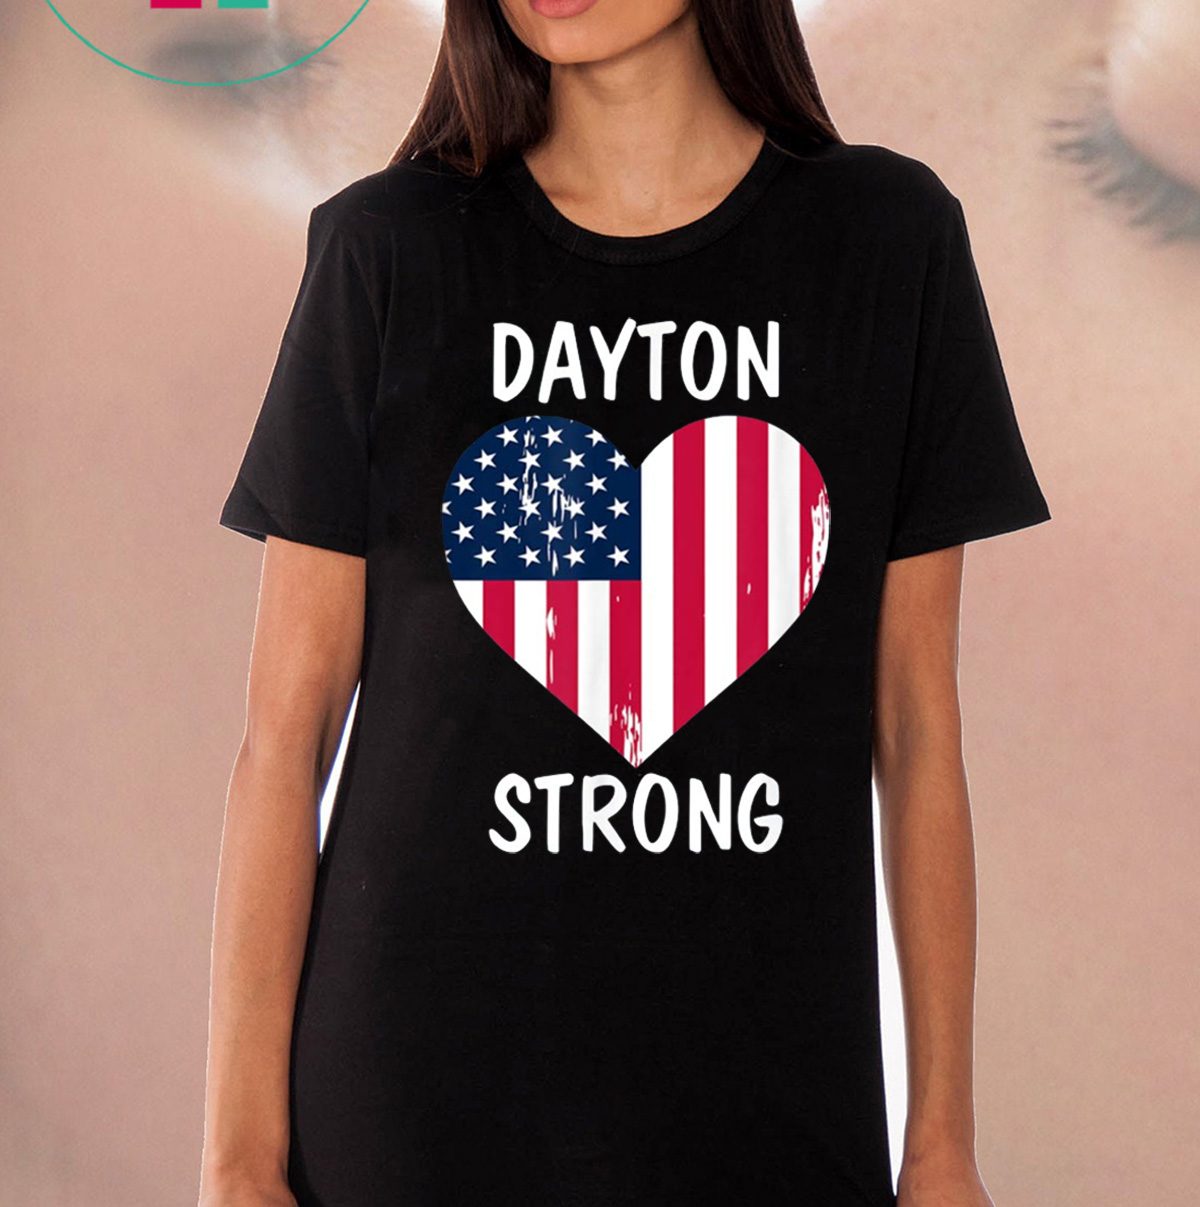 Dayton Strong Dayton Ohio Heart Tee Shirt - OrderQuilt.com1200 x 1207